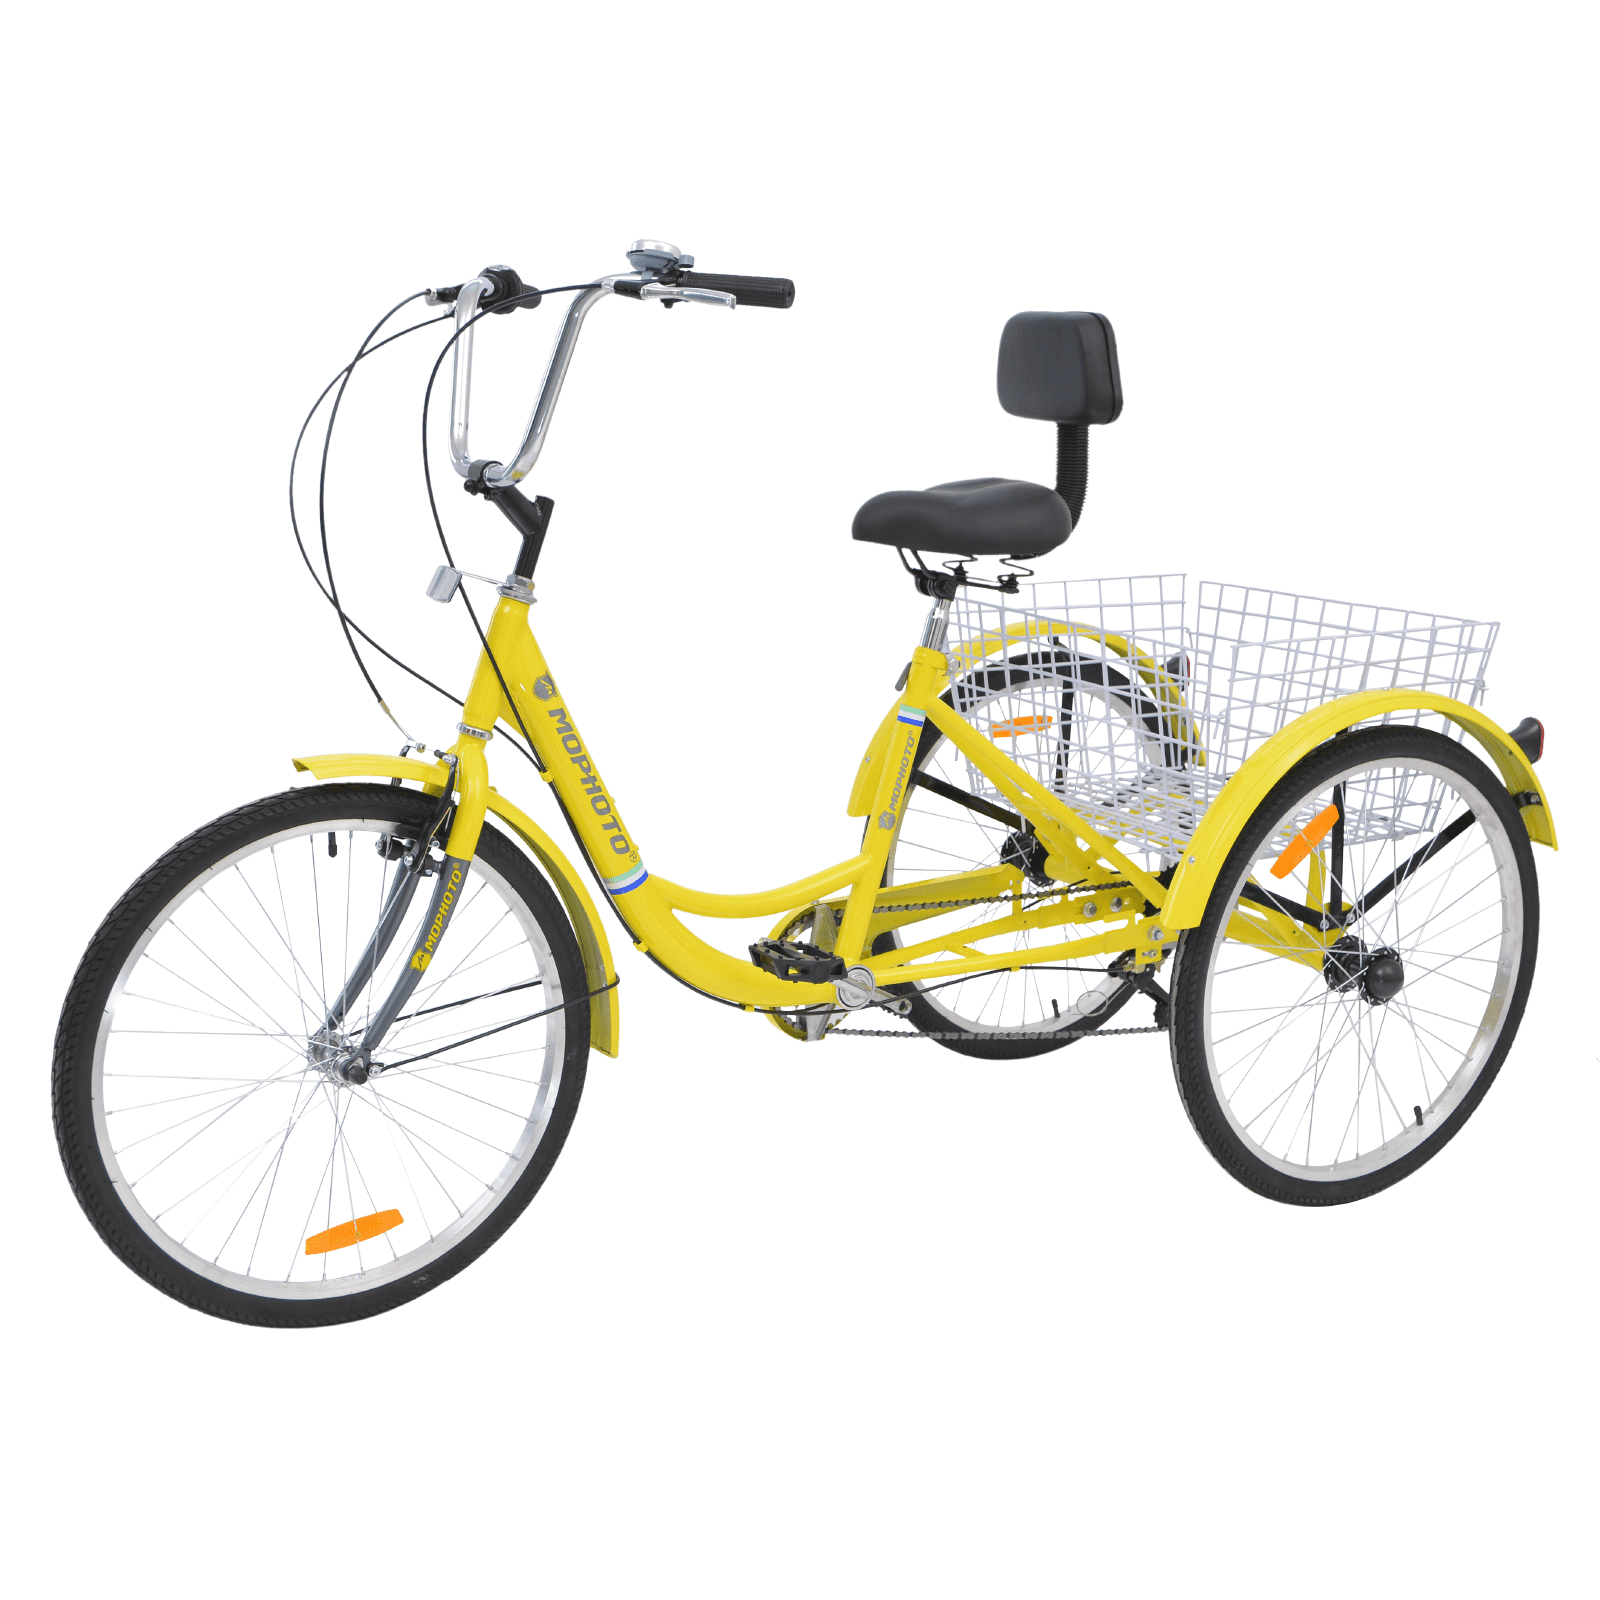 Ridgeyard Aluminum Frame 26" Adult Tricycle Trike Cruise Bicycle Bike Yellow 